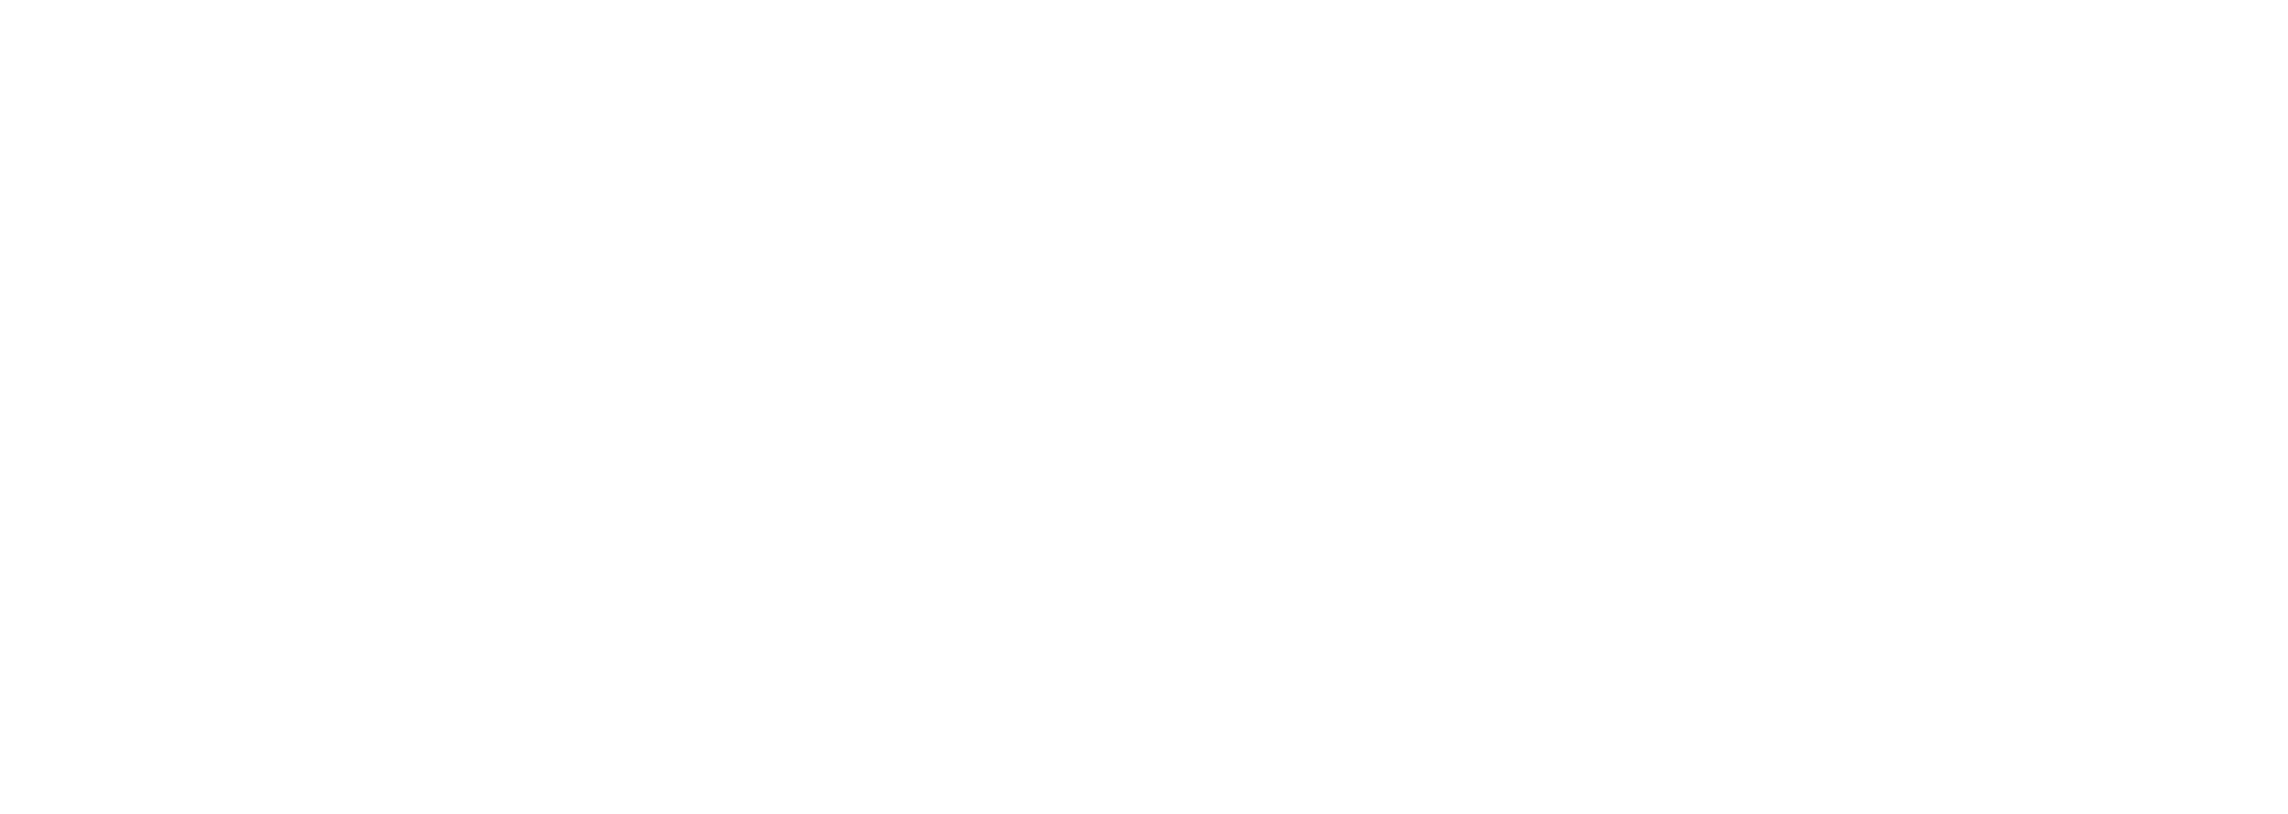 https://www.sbadvocacia.com.br/wp-content/uploads/2020/01/SBA_logo_horizontal_branco.png